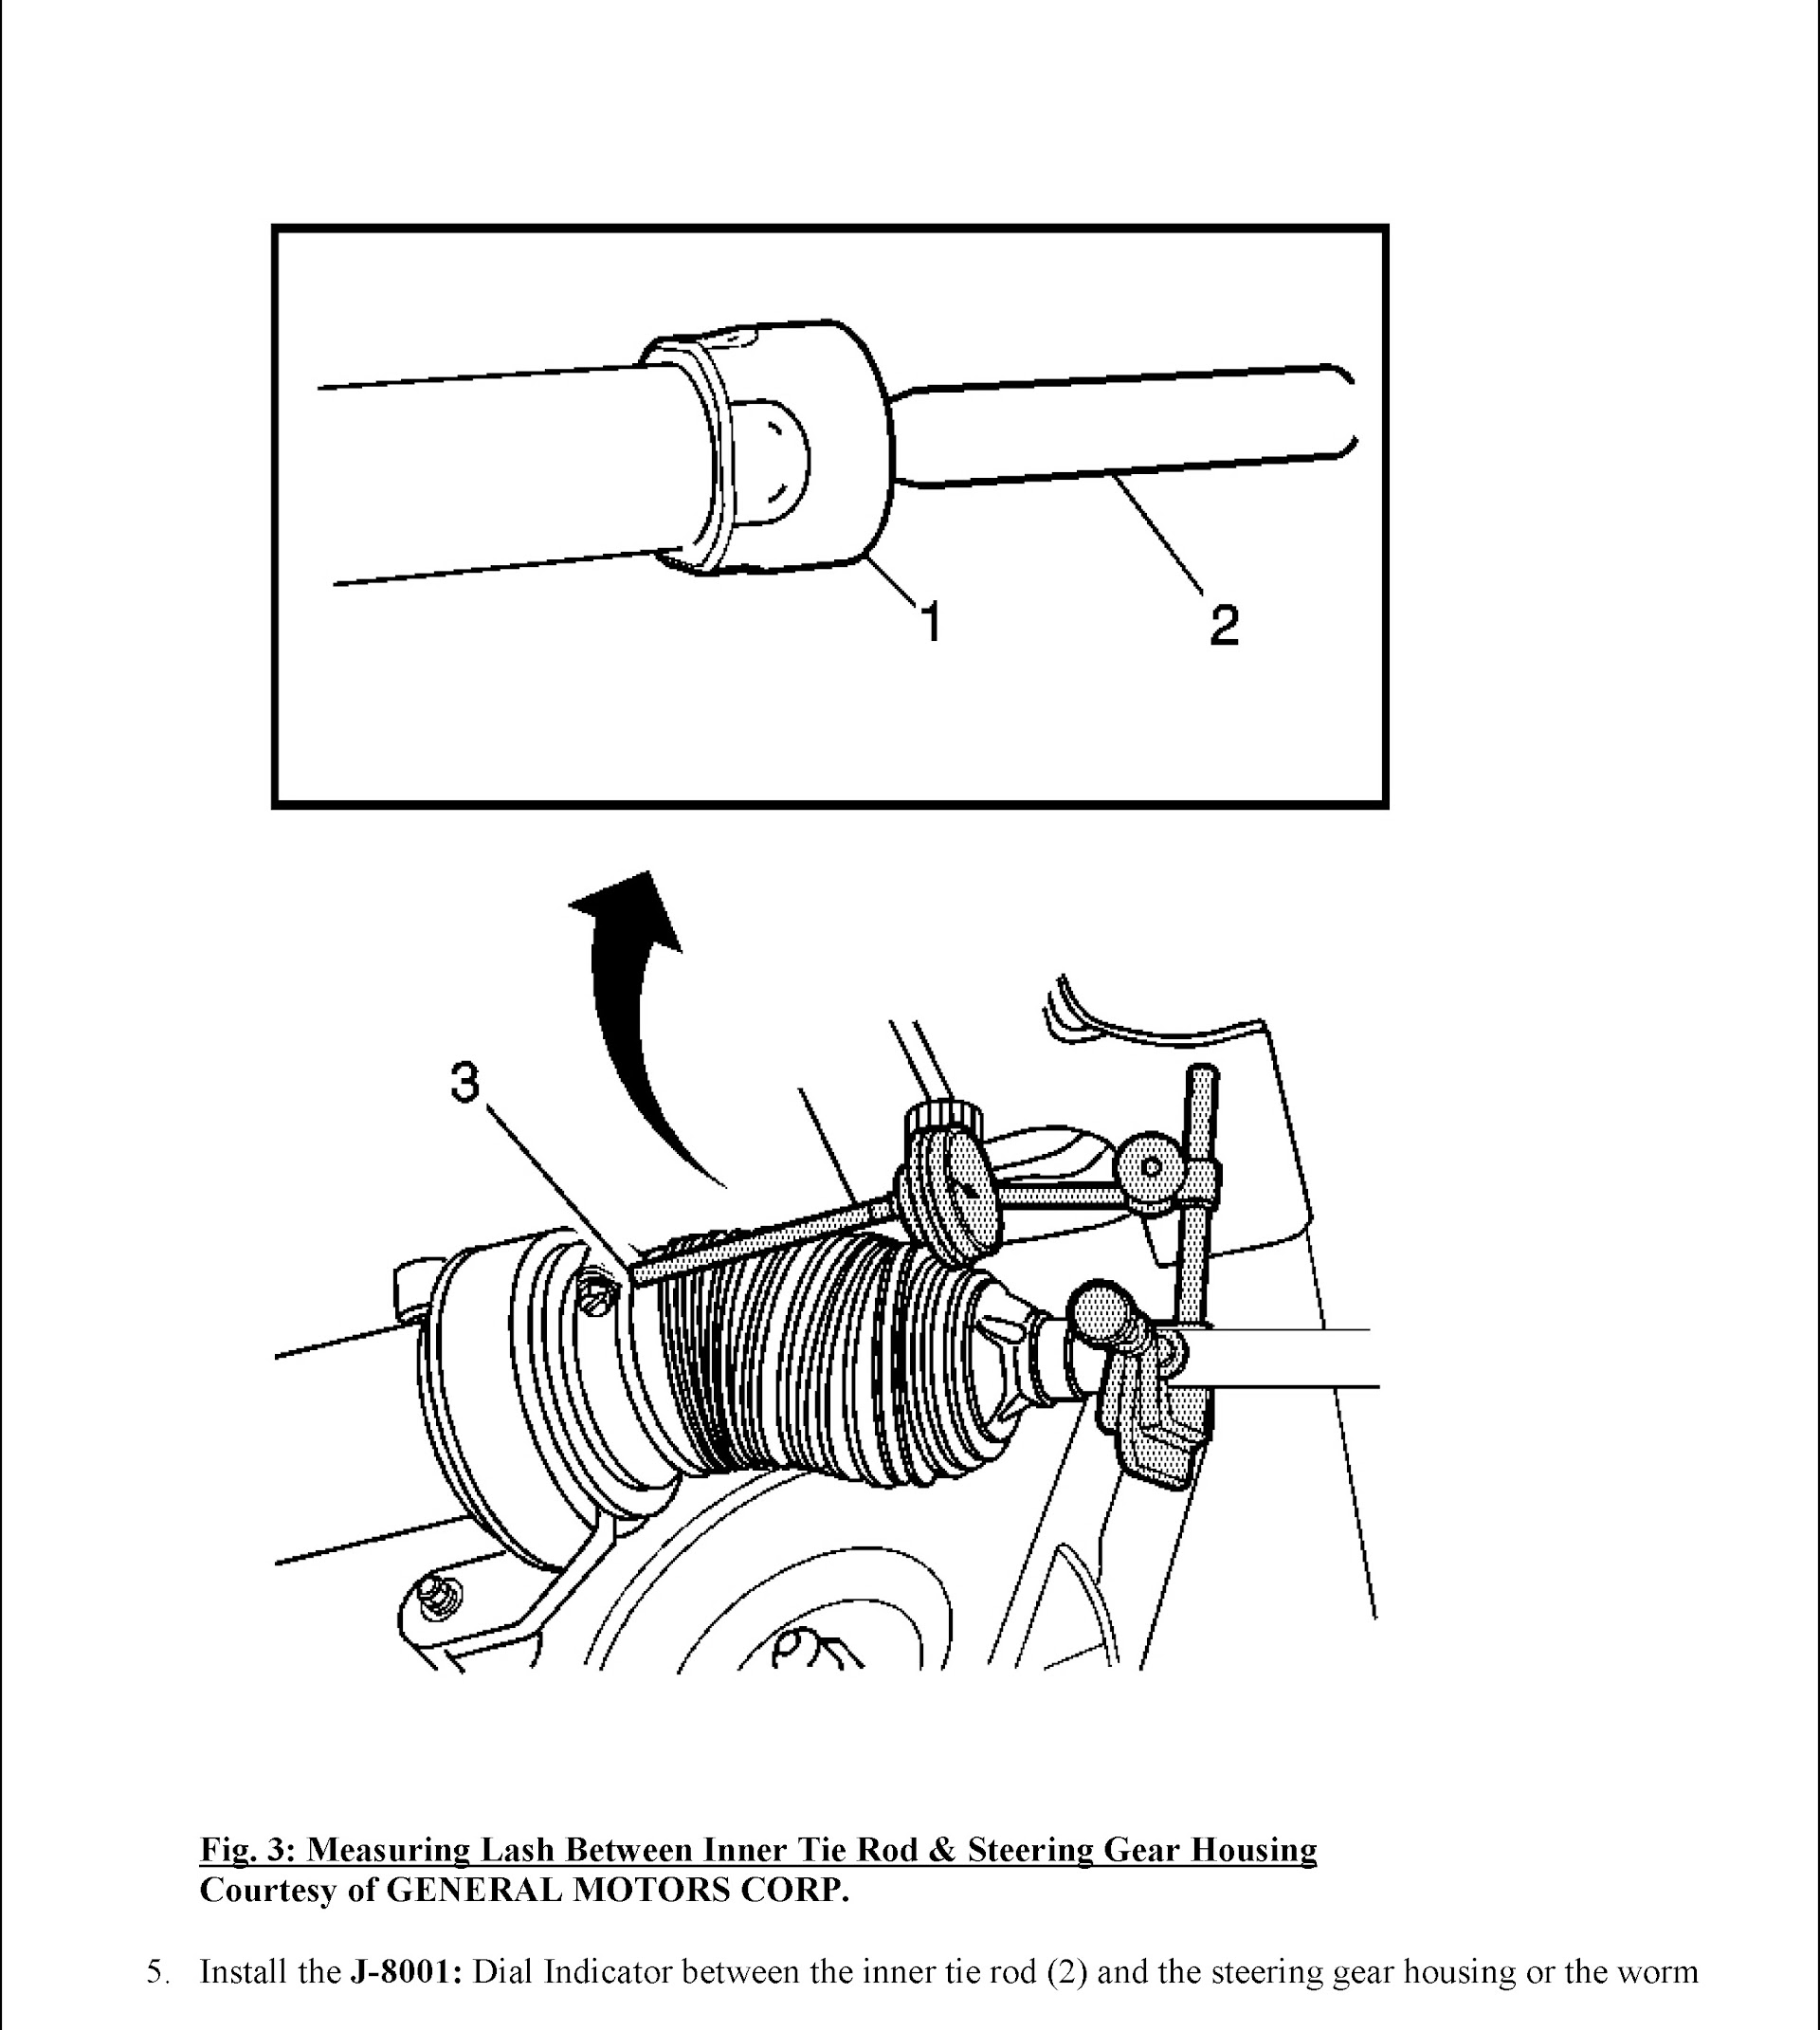 CONTENTS: 2010-2012 Chevrolet Equinox Repair Manual and GMC Terrain, Steering Gear Housing